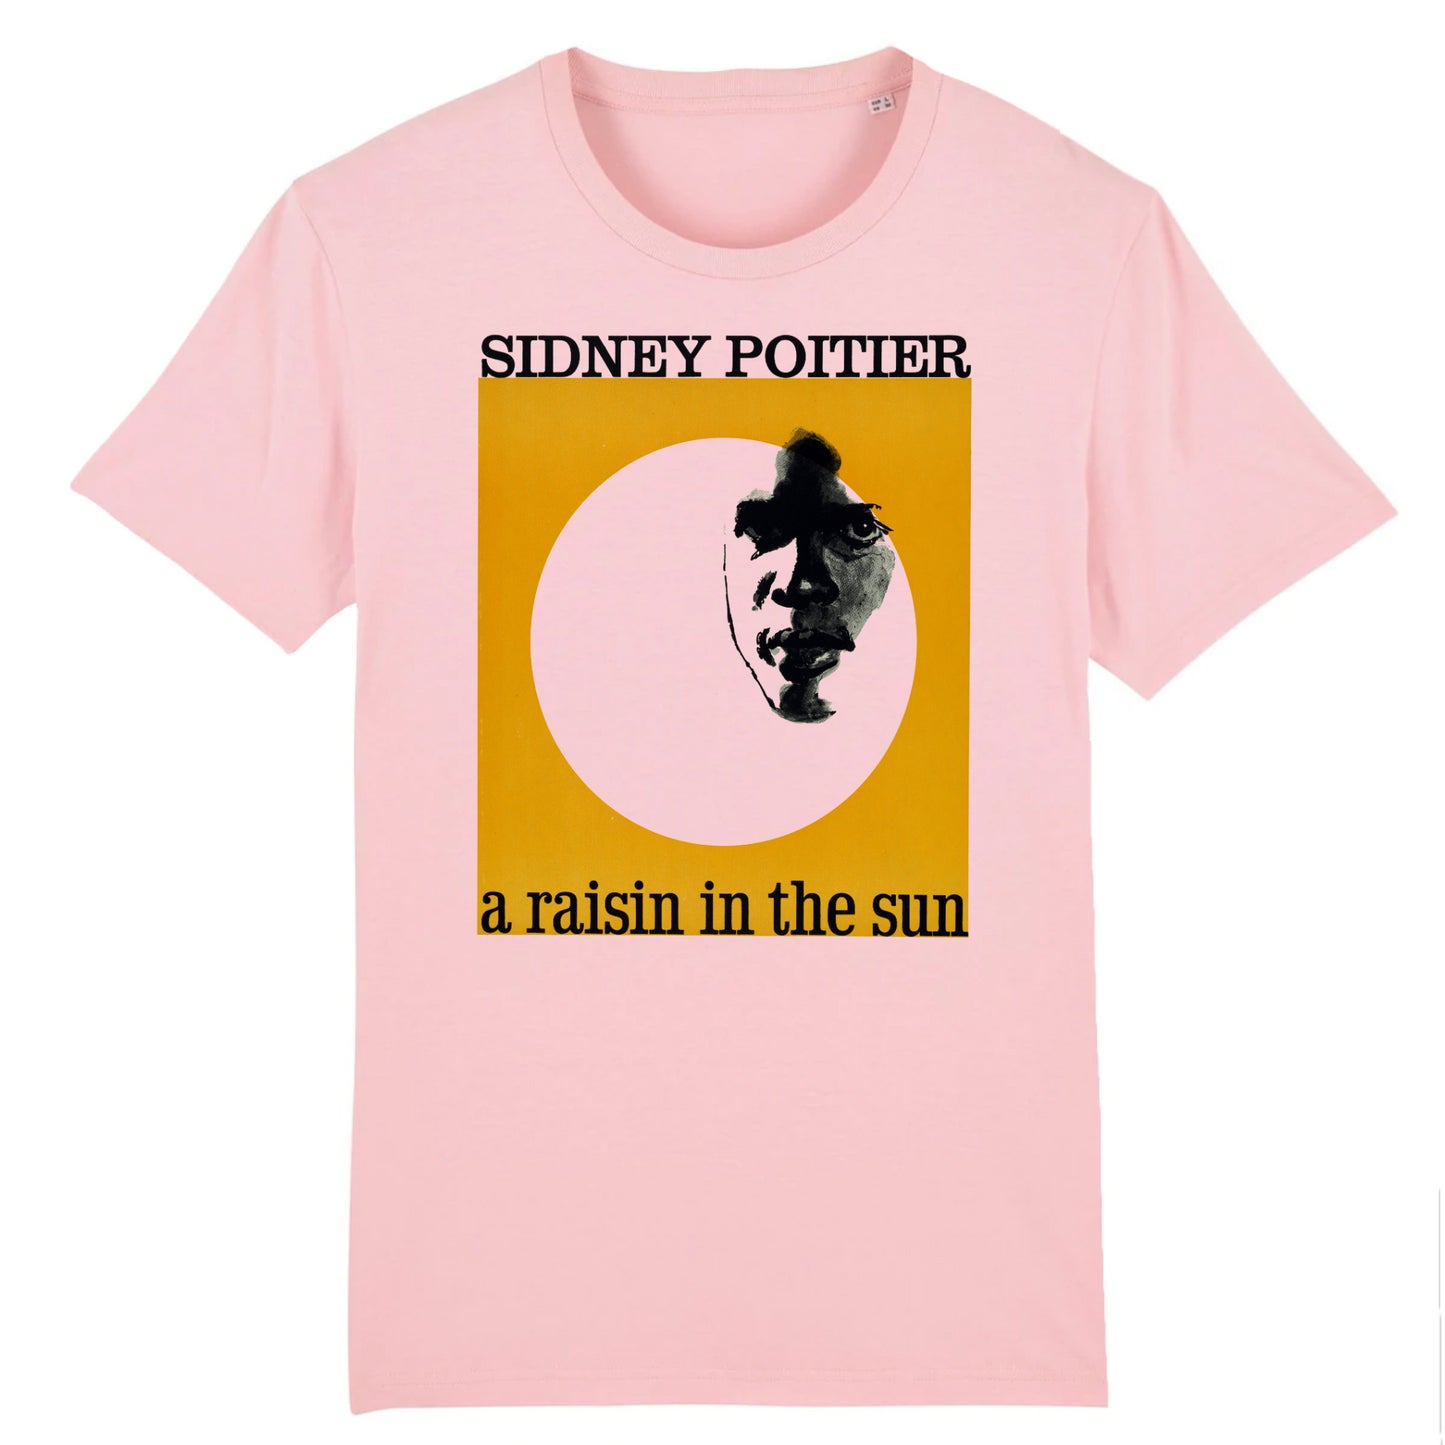 Sidney Poitier in A Raisin in the Sun - Organic Cotton T-Shirt